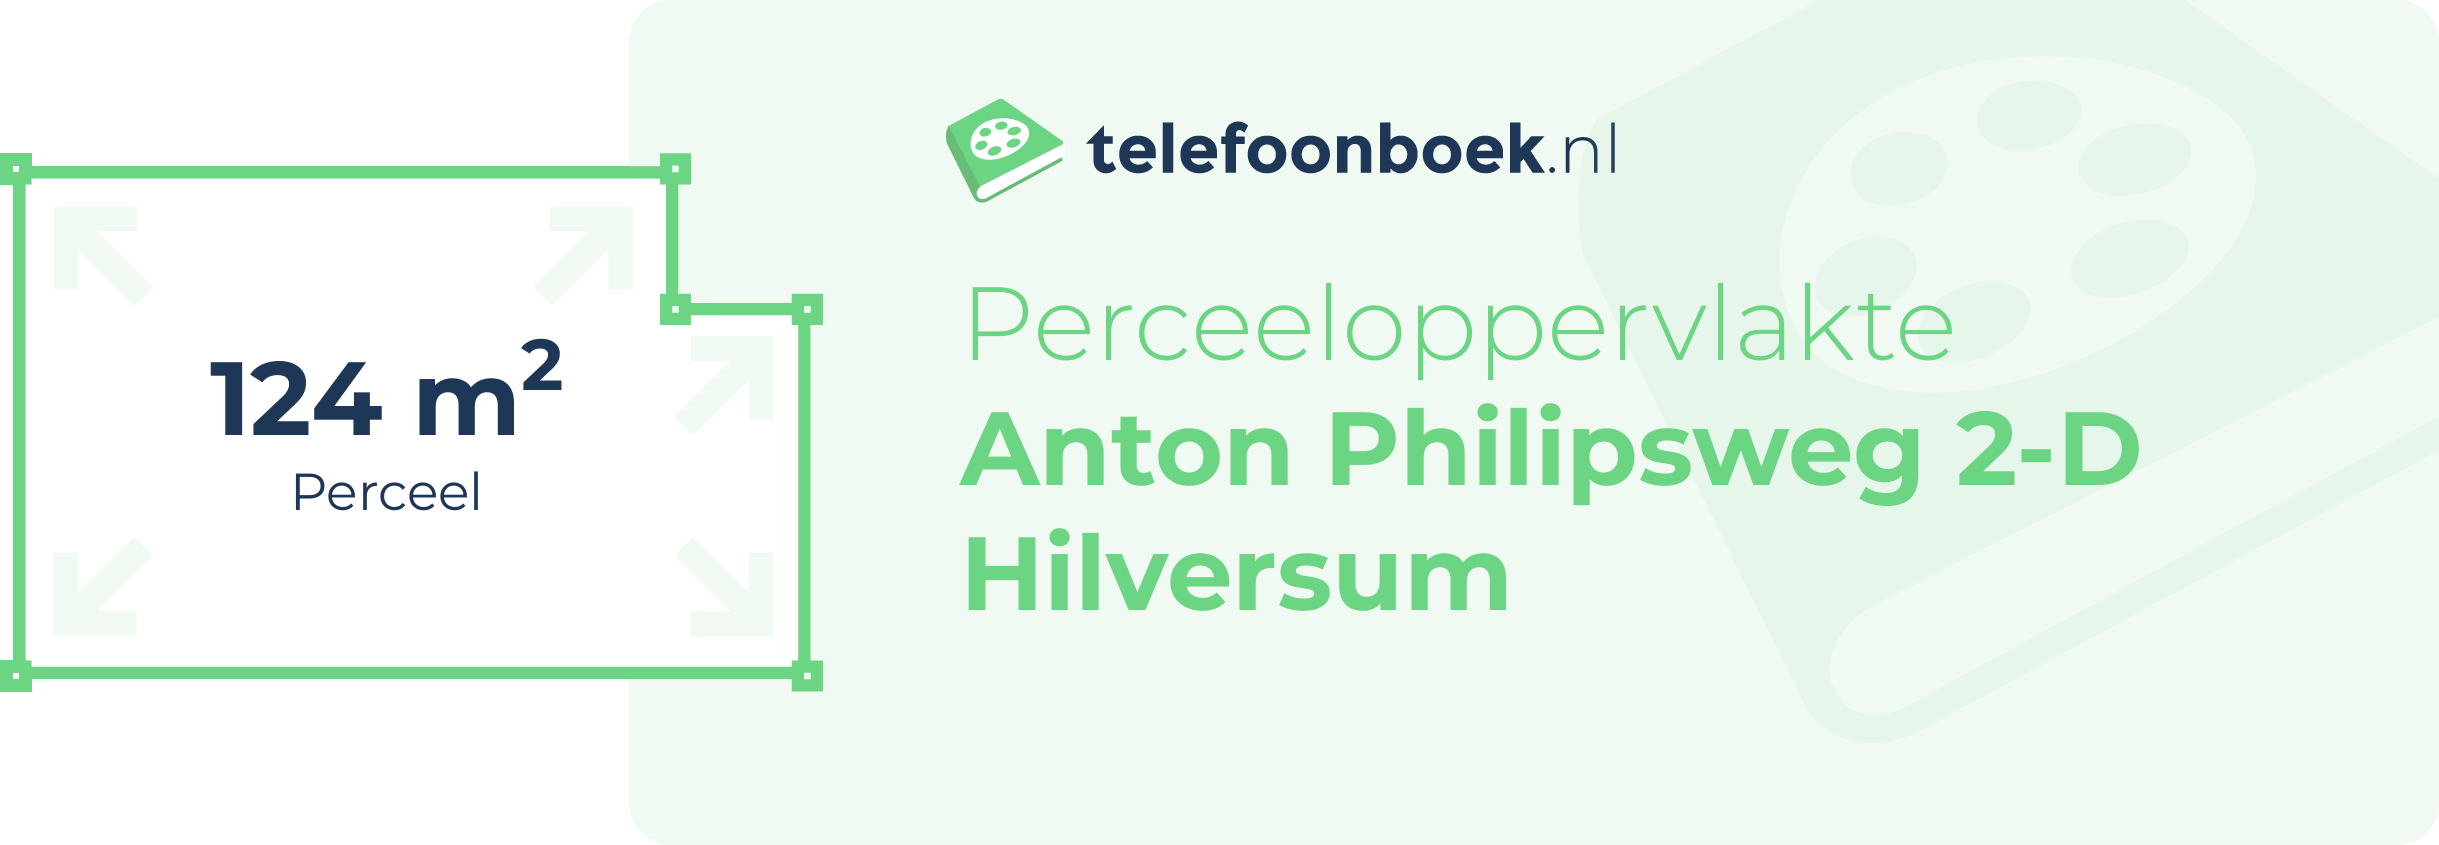 Perceeloppervlakte Anton Philipsweg 2-D Hilversum